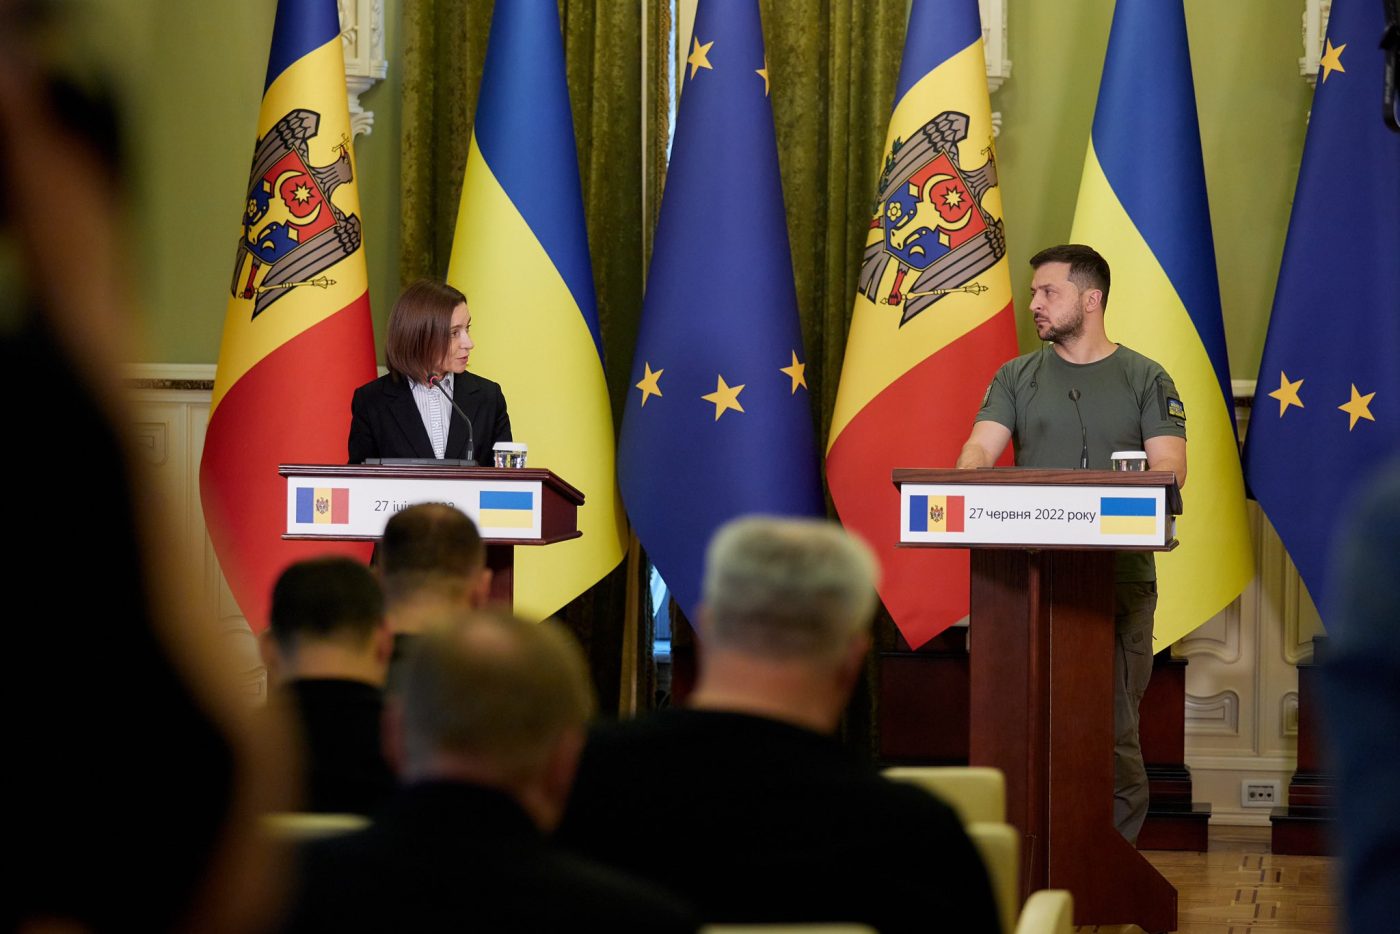 Photo: President of Moldova Maia Sandu with Ukrainian President Volodymyr Zelenskyy. Credit: @sandumaiamd via Twitter. https://twitter.com/sandumaiamd/status/1541461832308871169